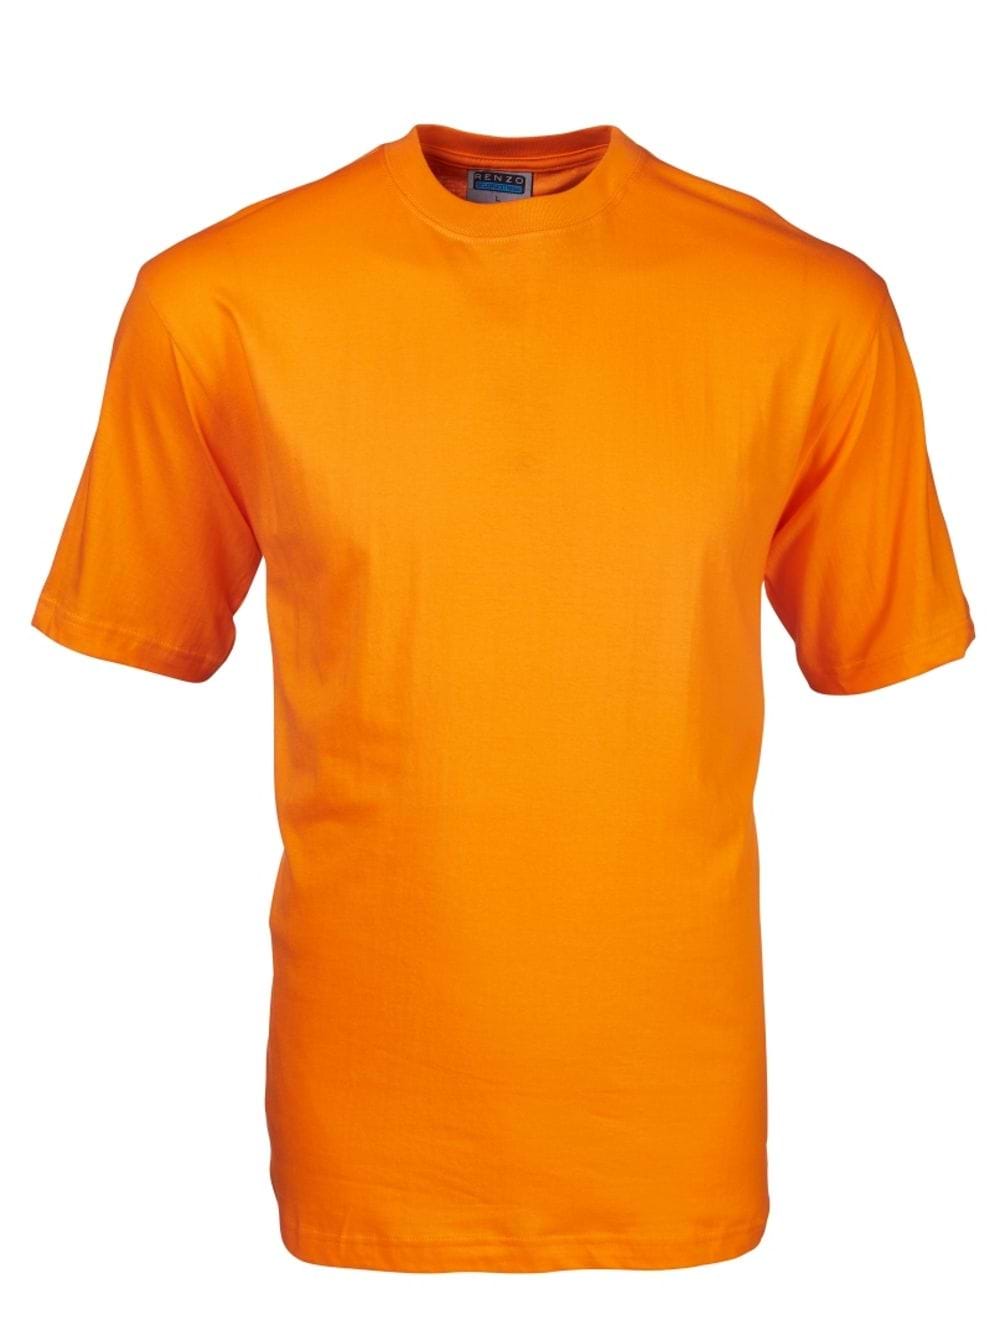 165G Crew Neck T-Shirt - Orange